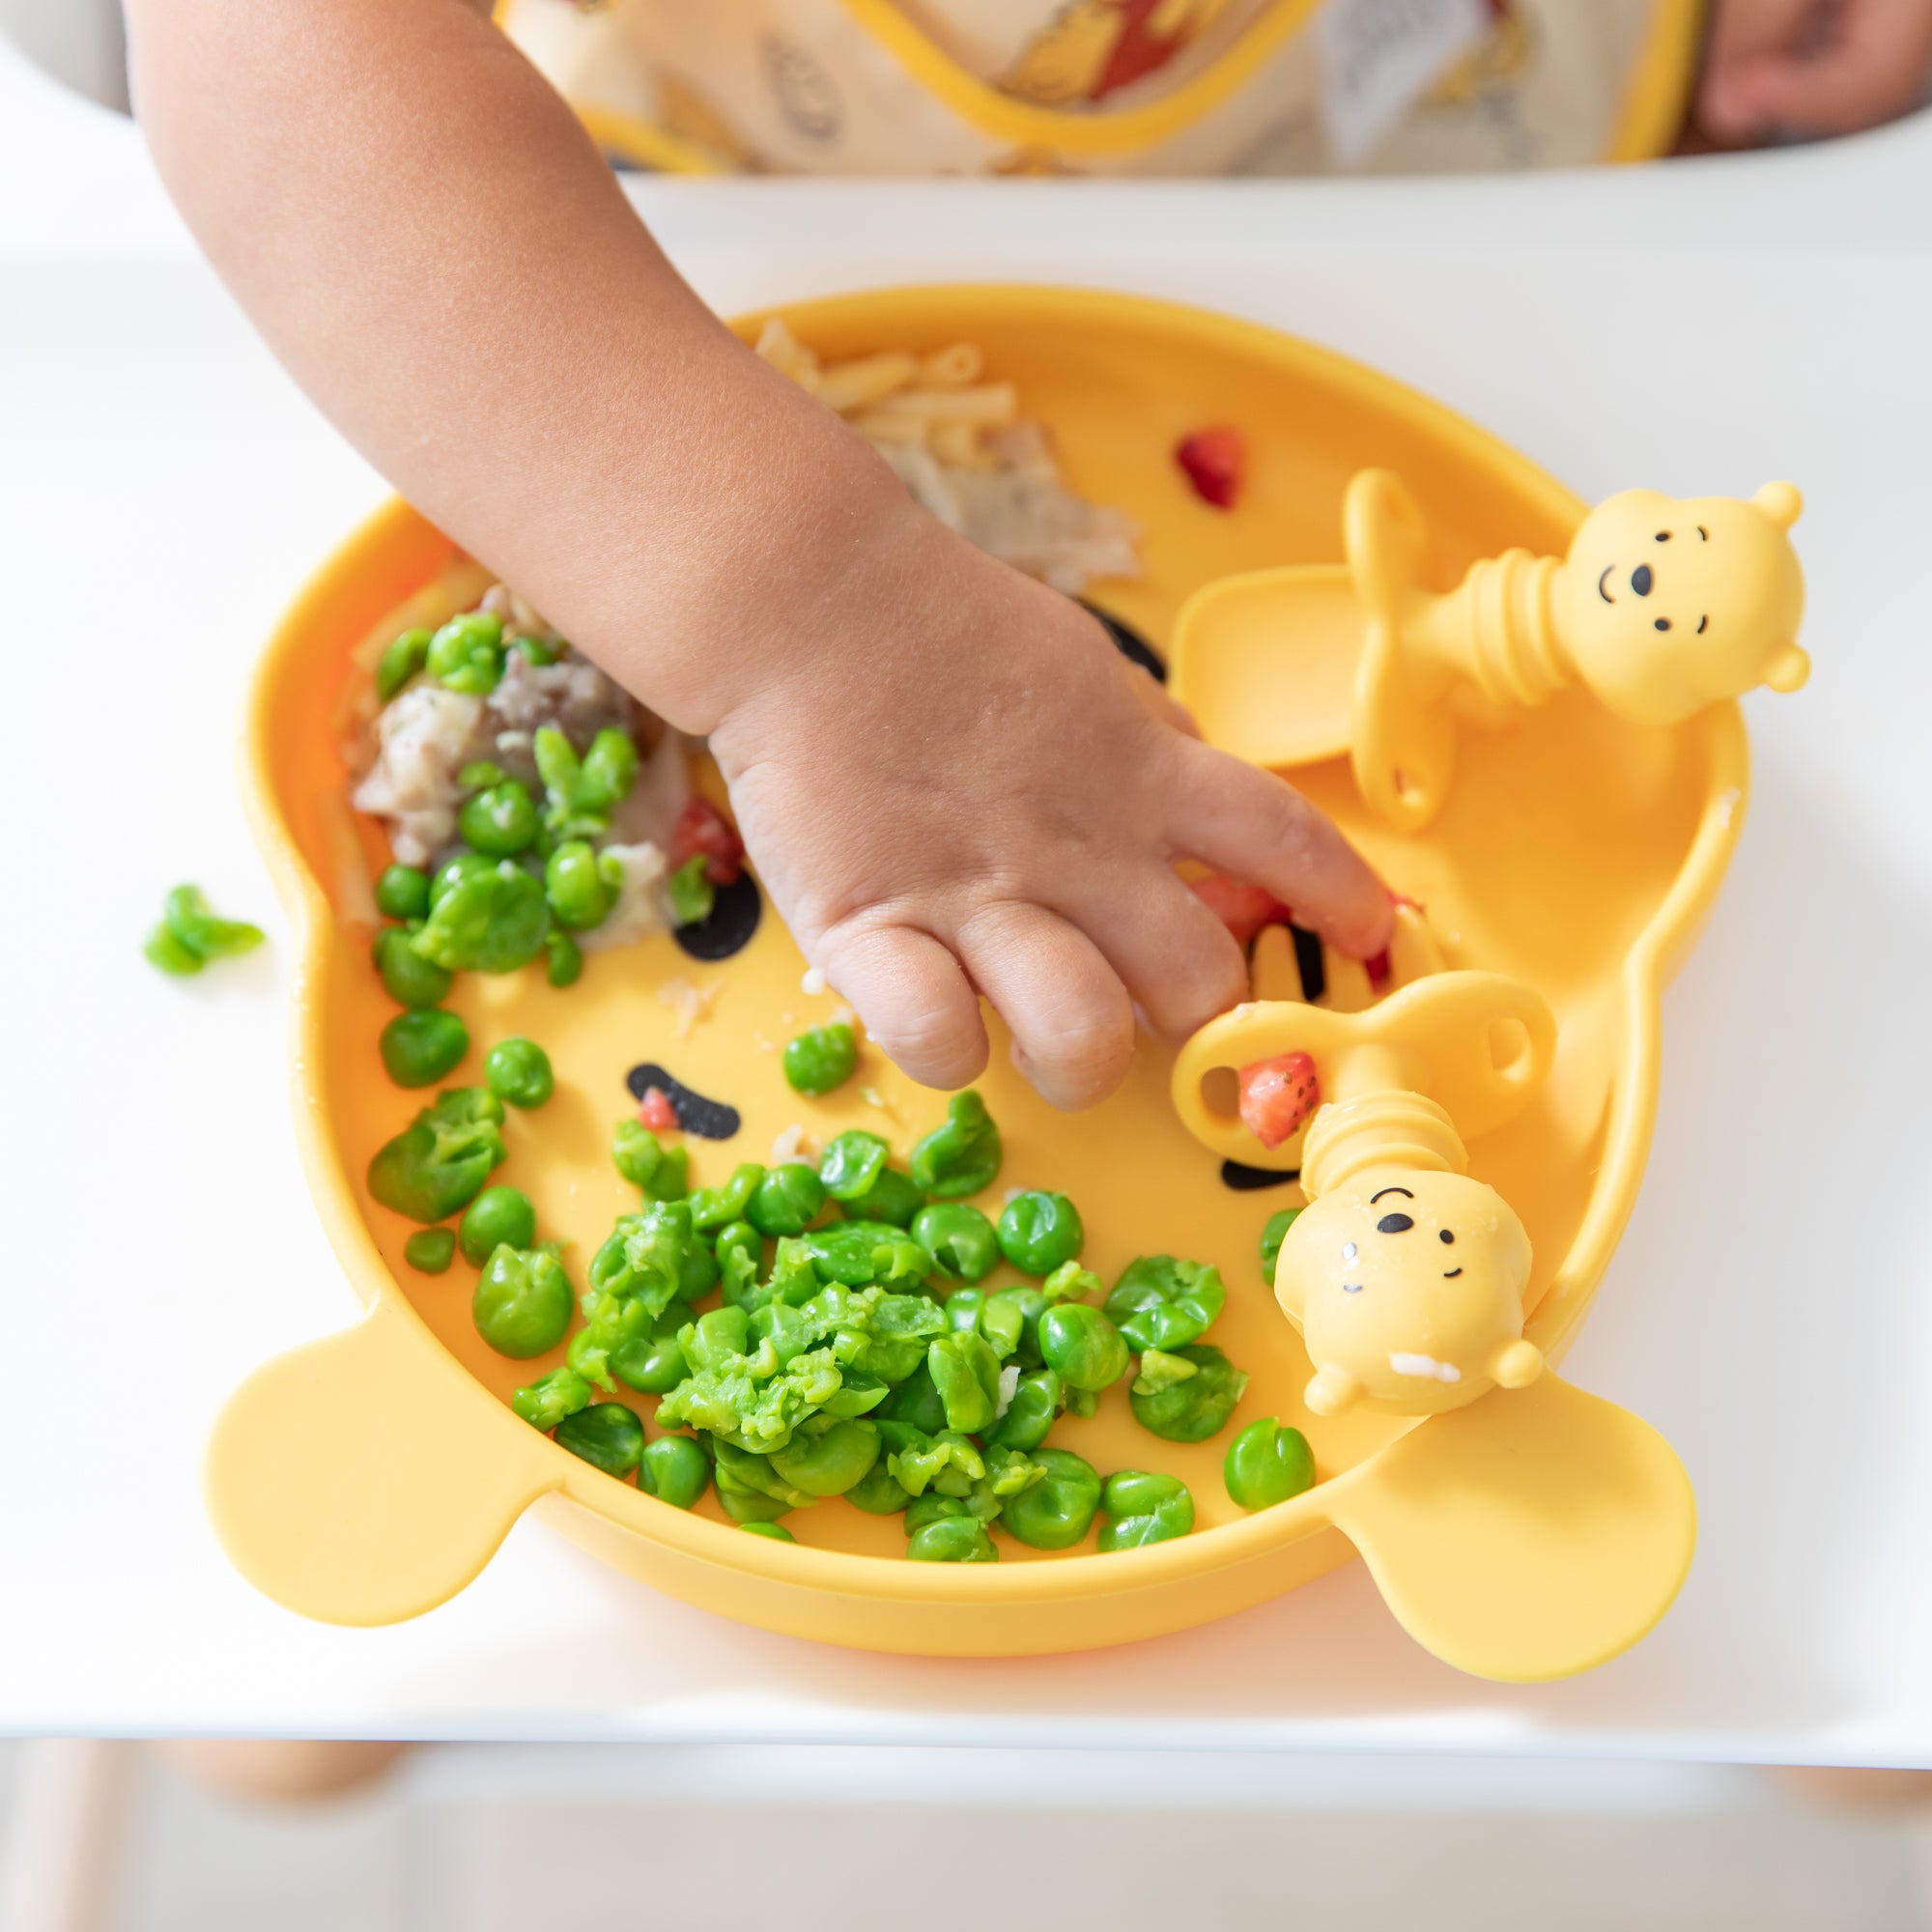 DISNEY MICKEY MOUSE TUPPERWARE CHILD FEEDING SET - NEW